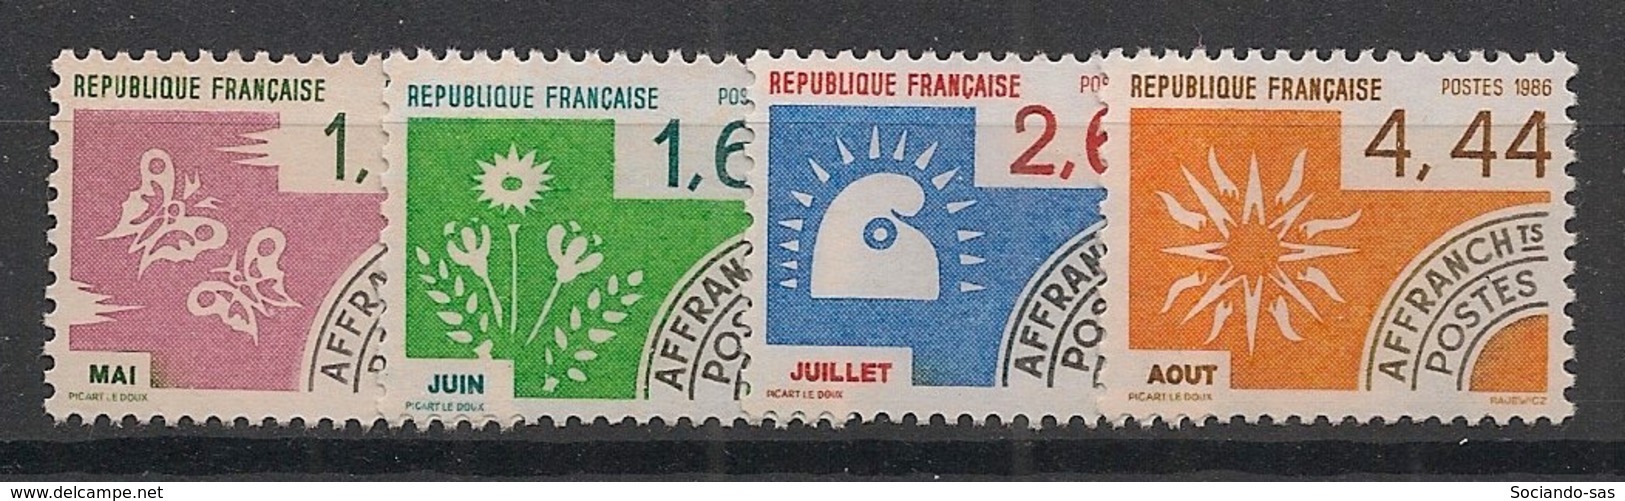 France - 1986 - Préo N°Yv. 190 à 193 - Série Complète - Neuf Luxe ** / MNH / Postfrisch - 1964-1988